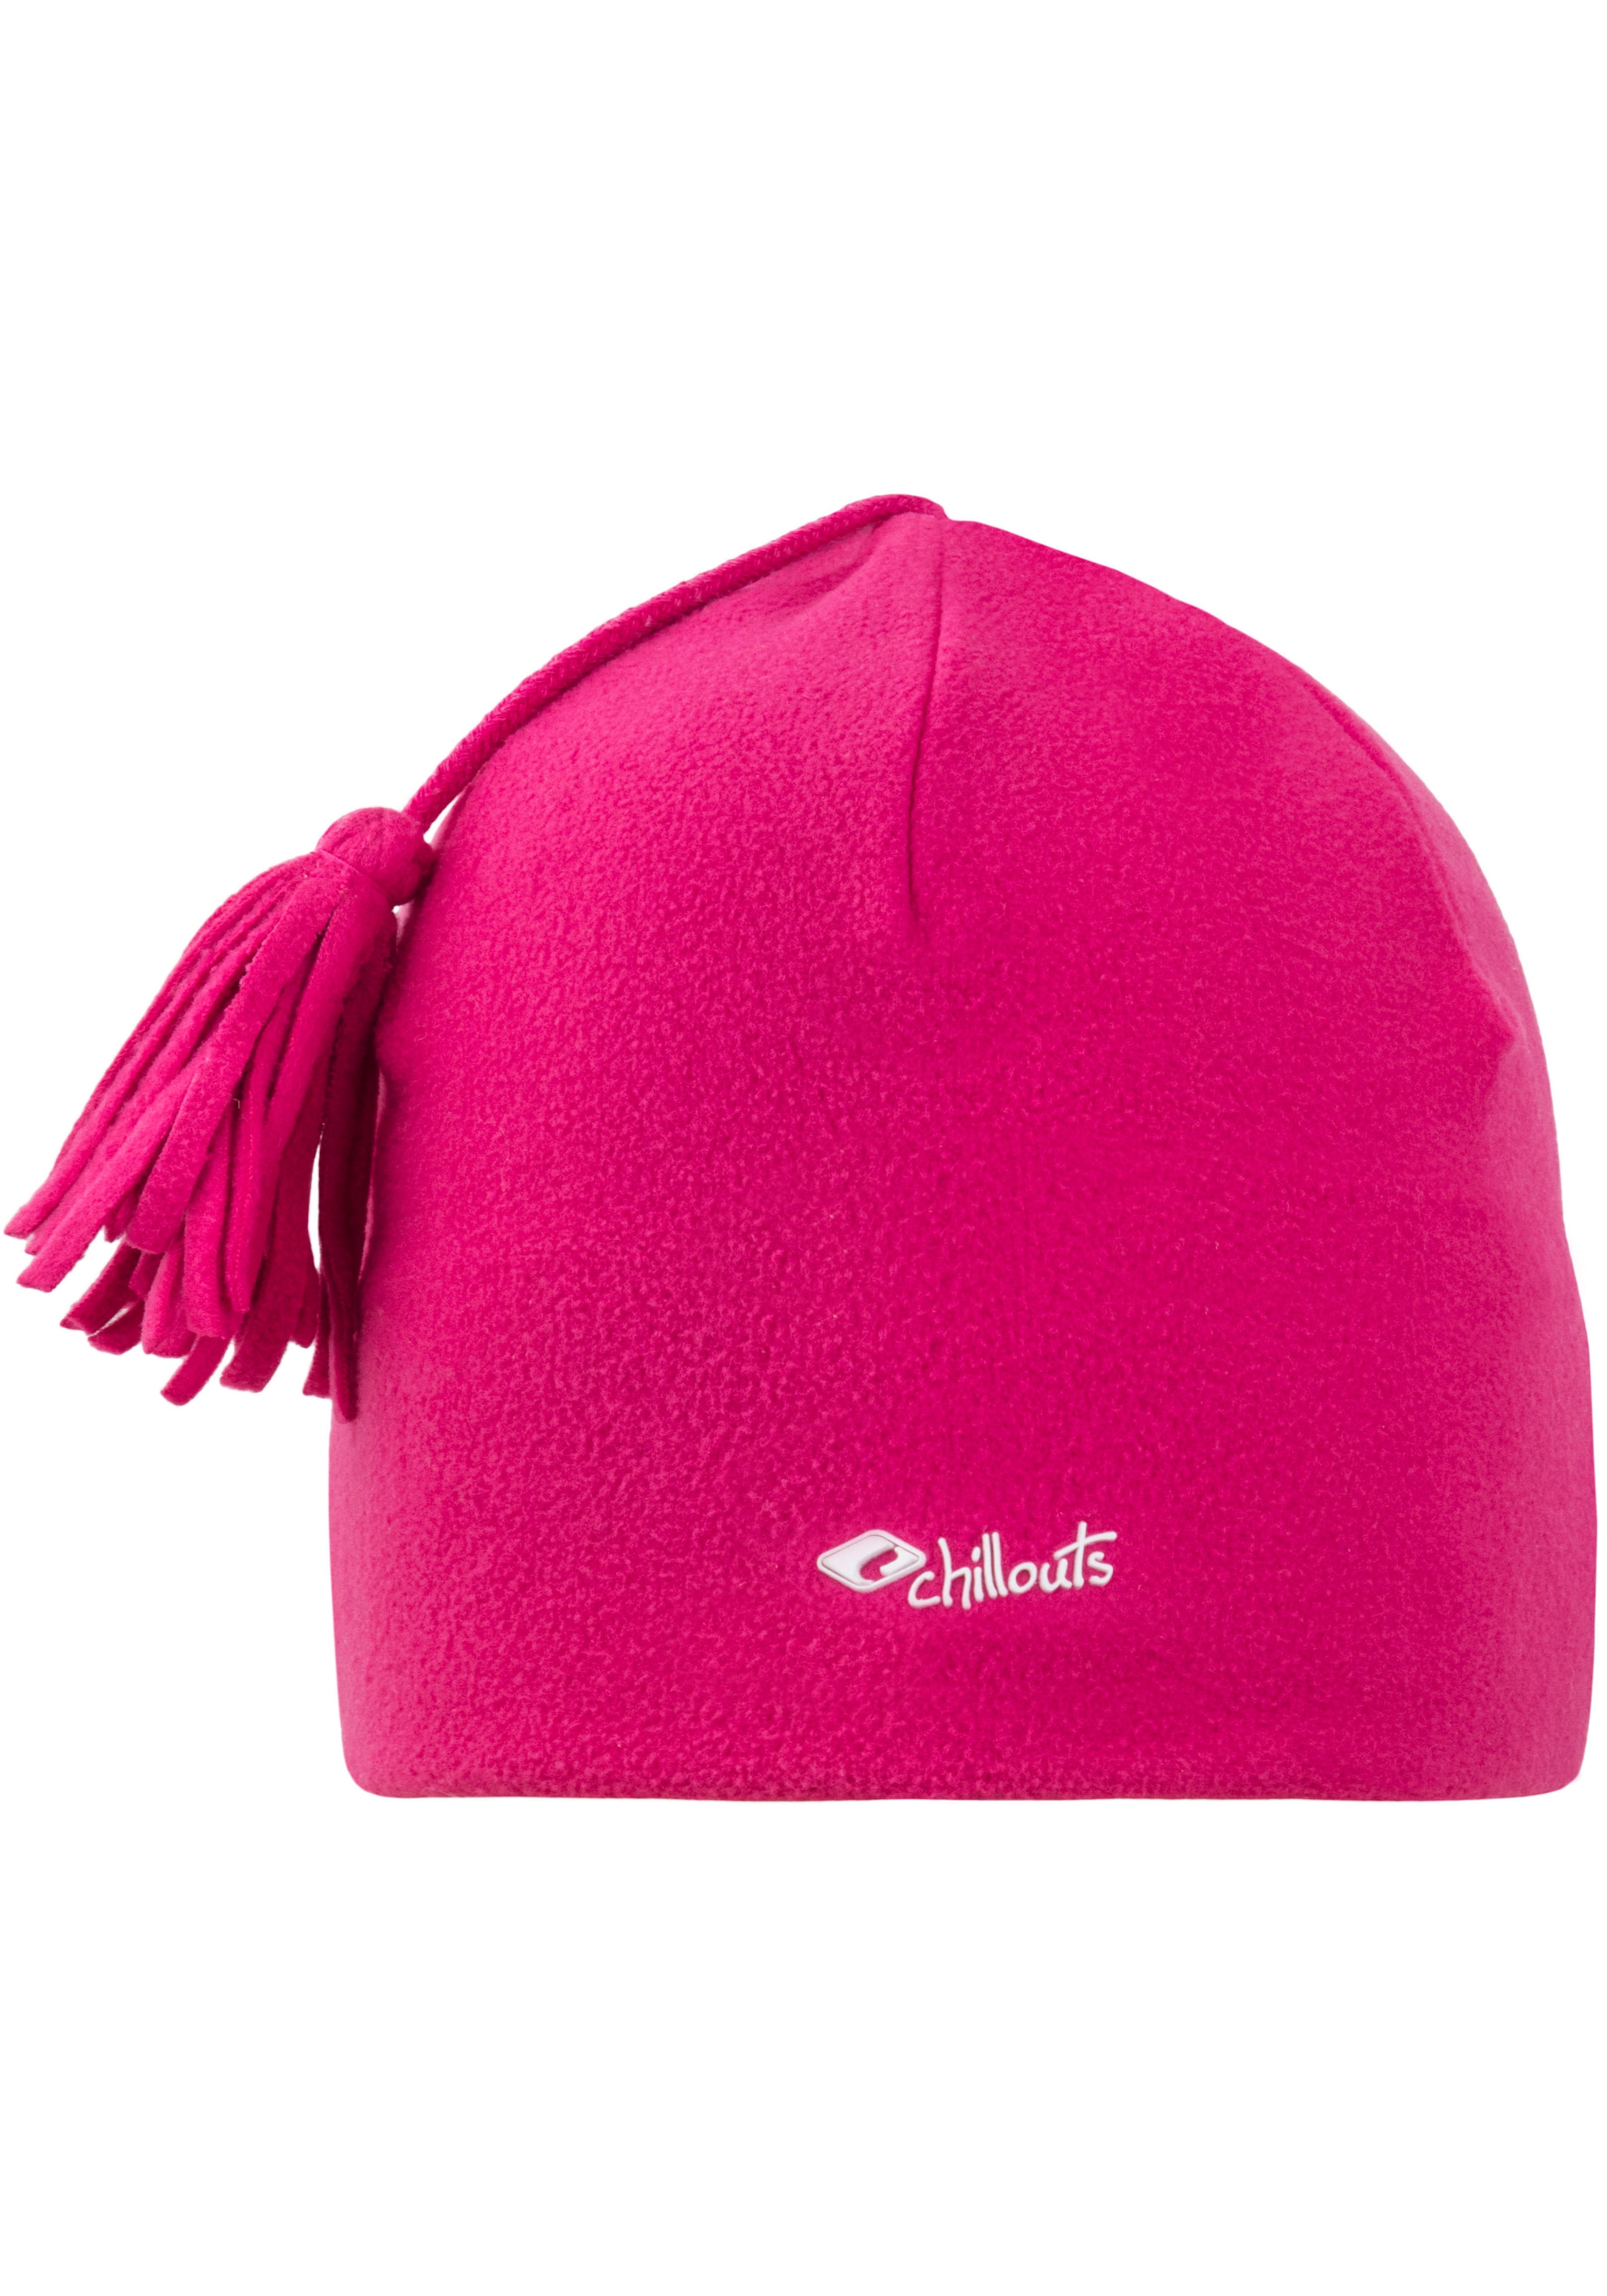 chillouts Fleecemütze, Freeze Fleece online Pom kaufen | BAUR Hat